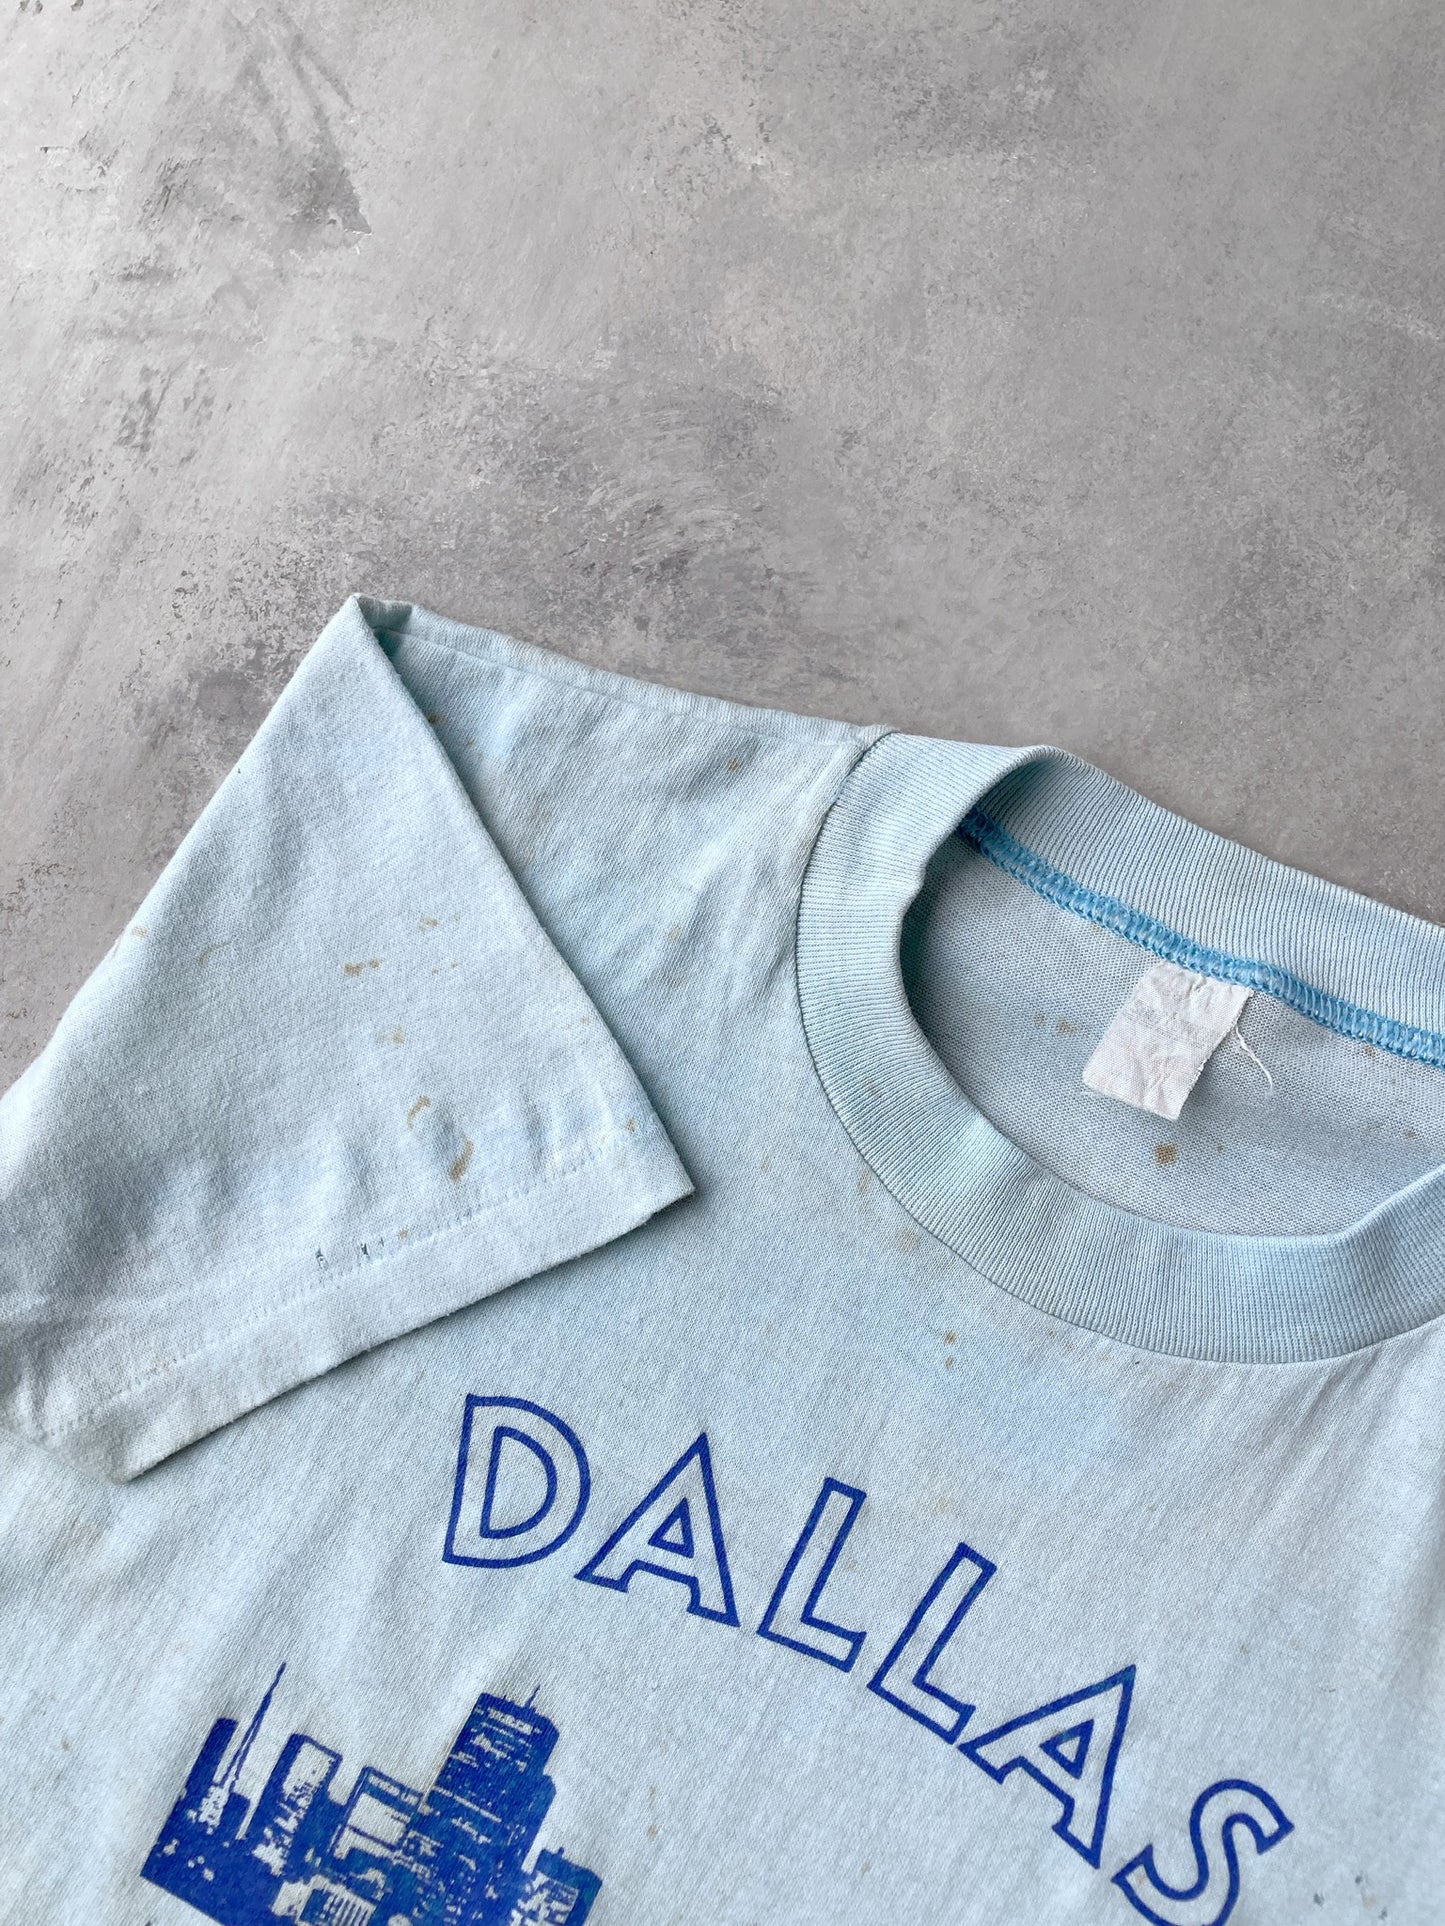 Dallas, Texas Skyline T-Shirt 80's - Medium